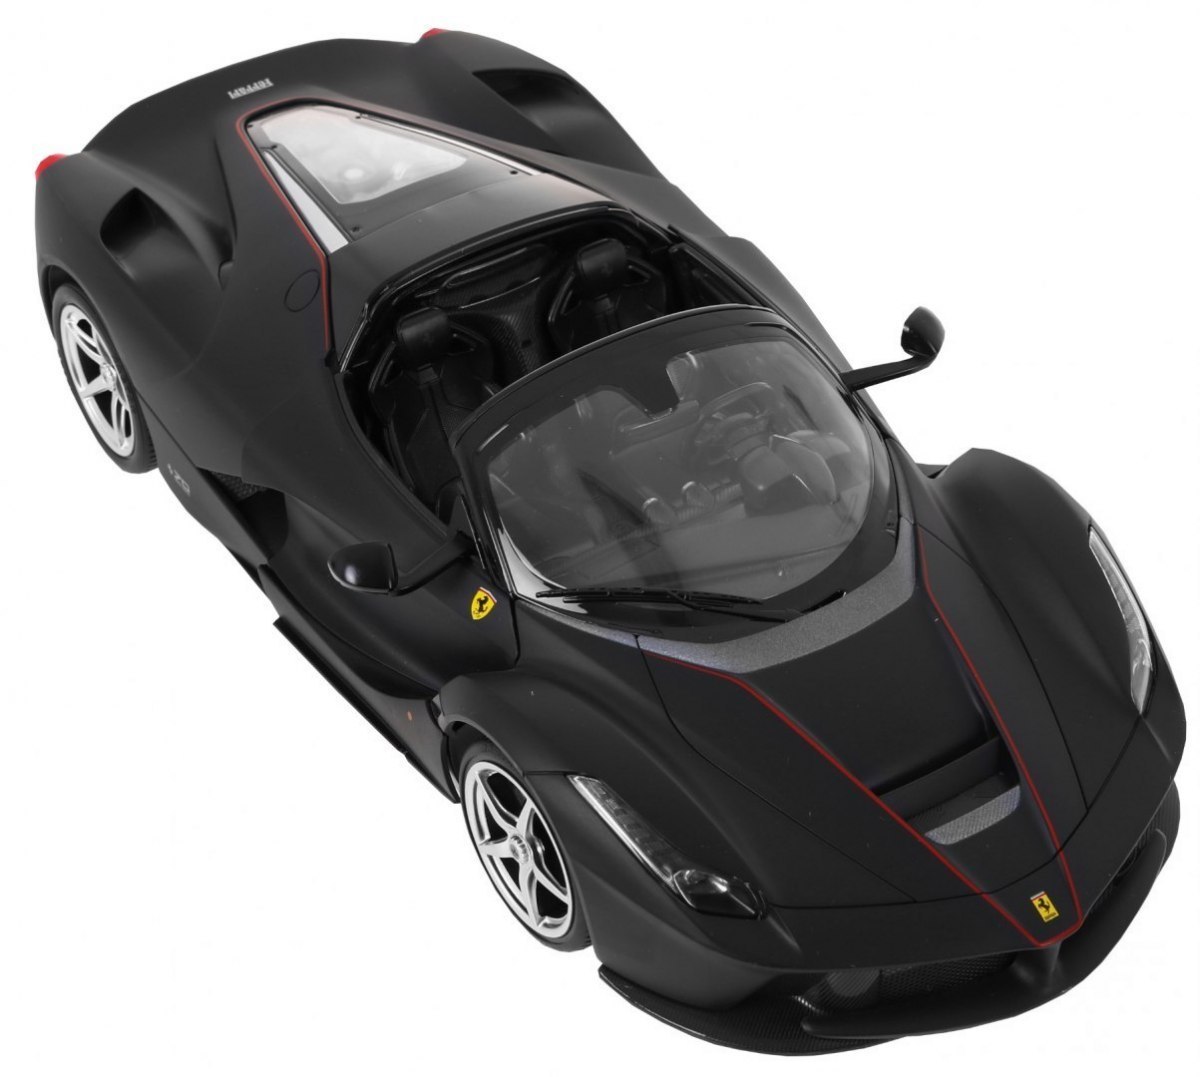 Autko zdalnie sterowane samochód R/C Ferrari LaFerrari Aperta czarne 1:14 RASTAR